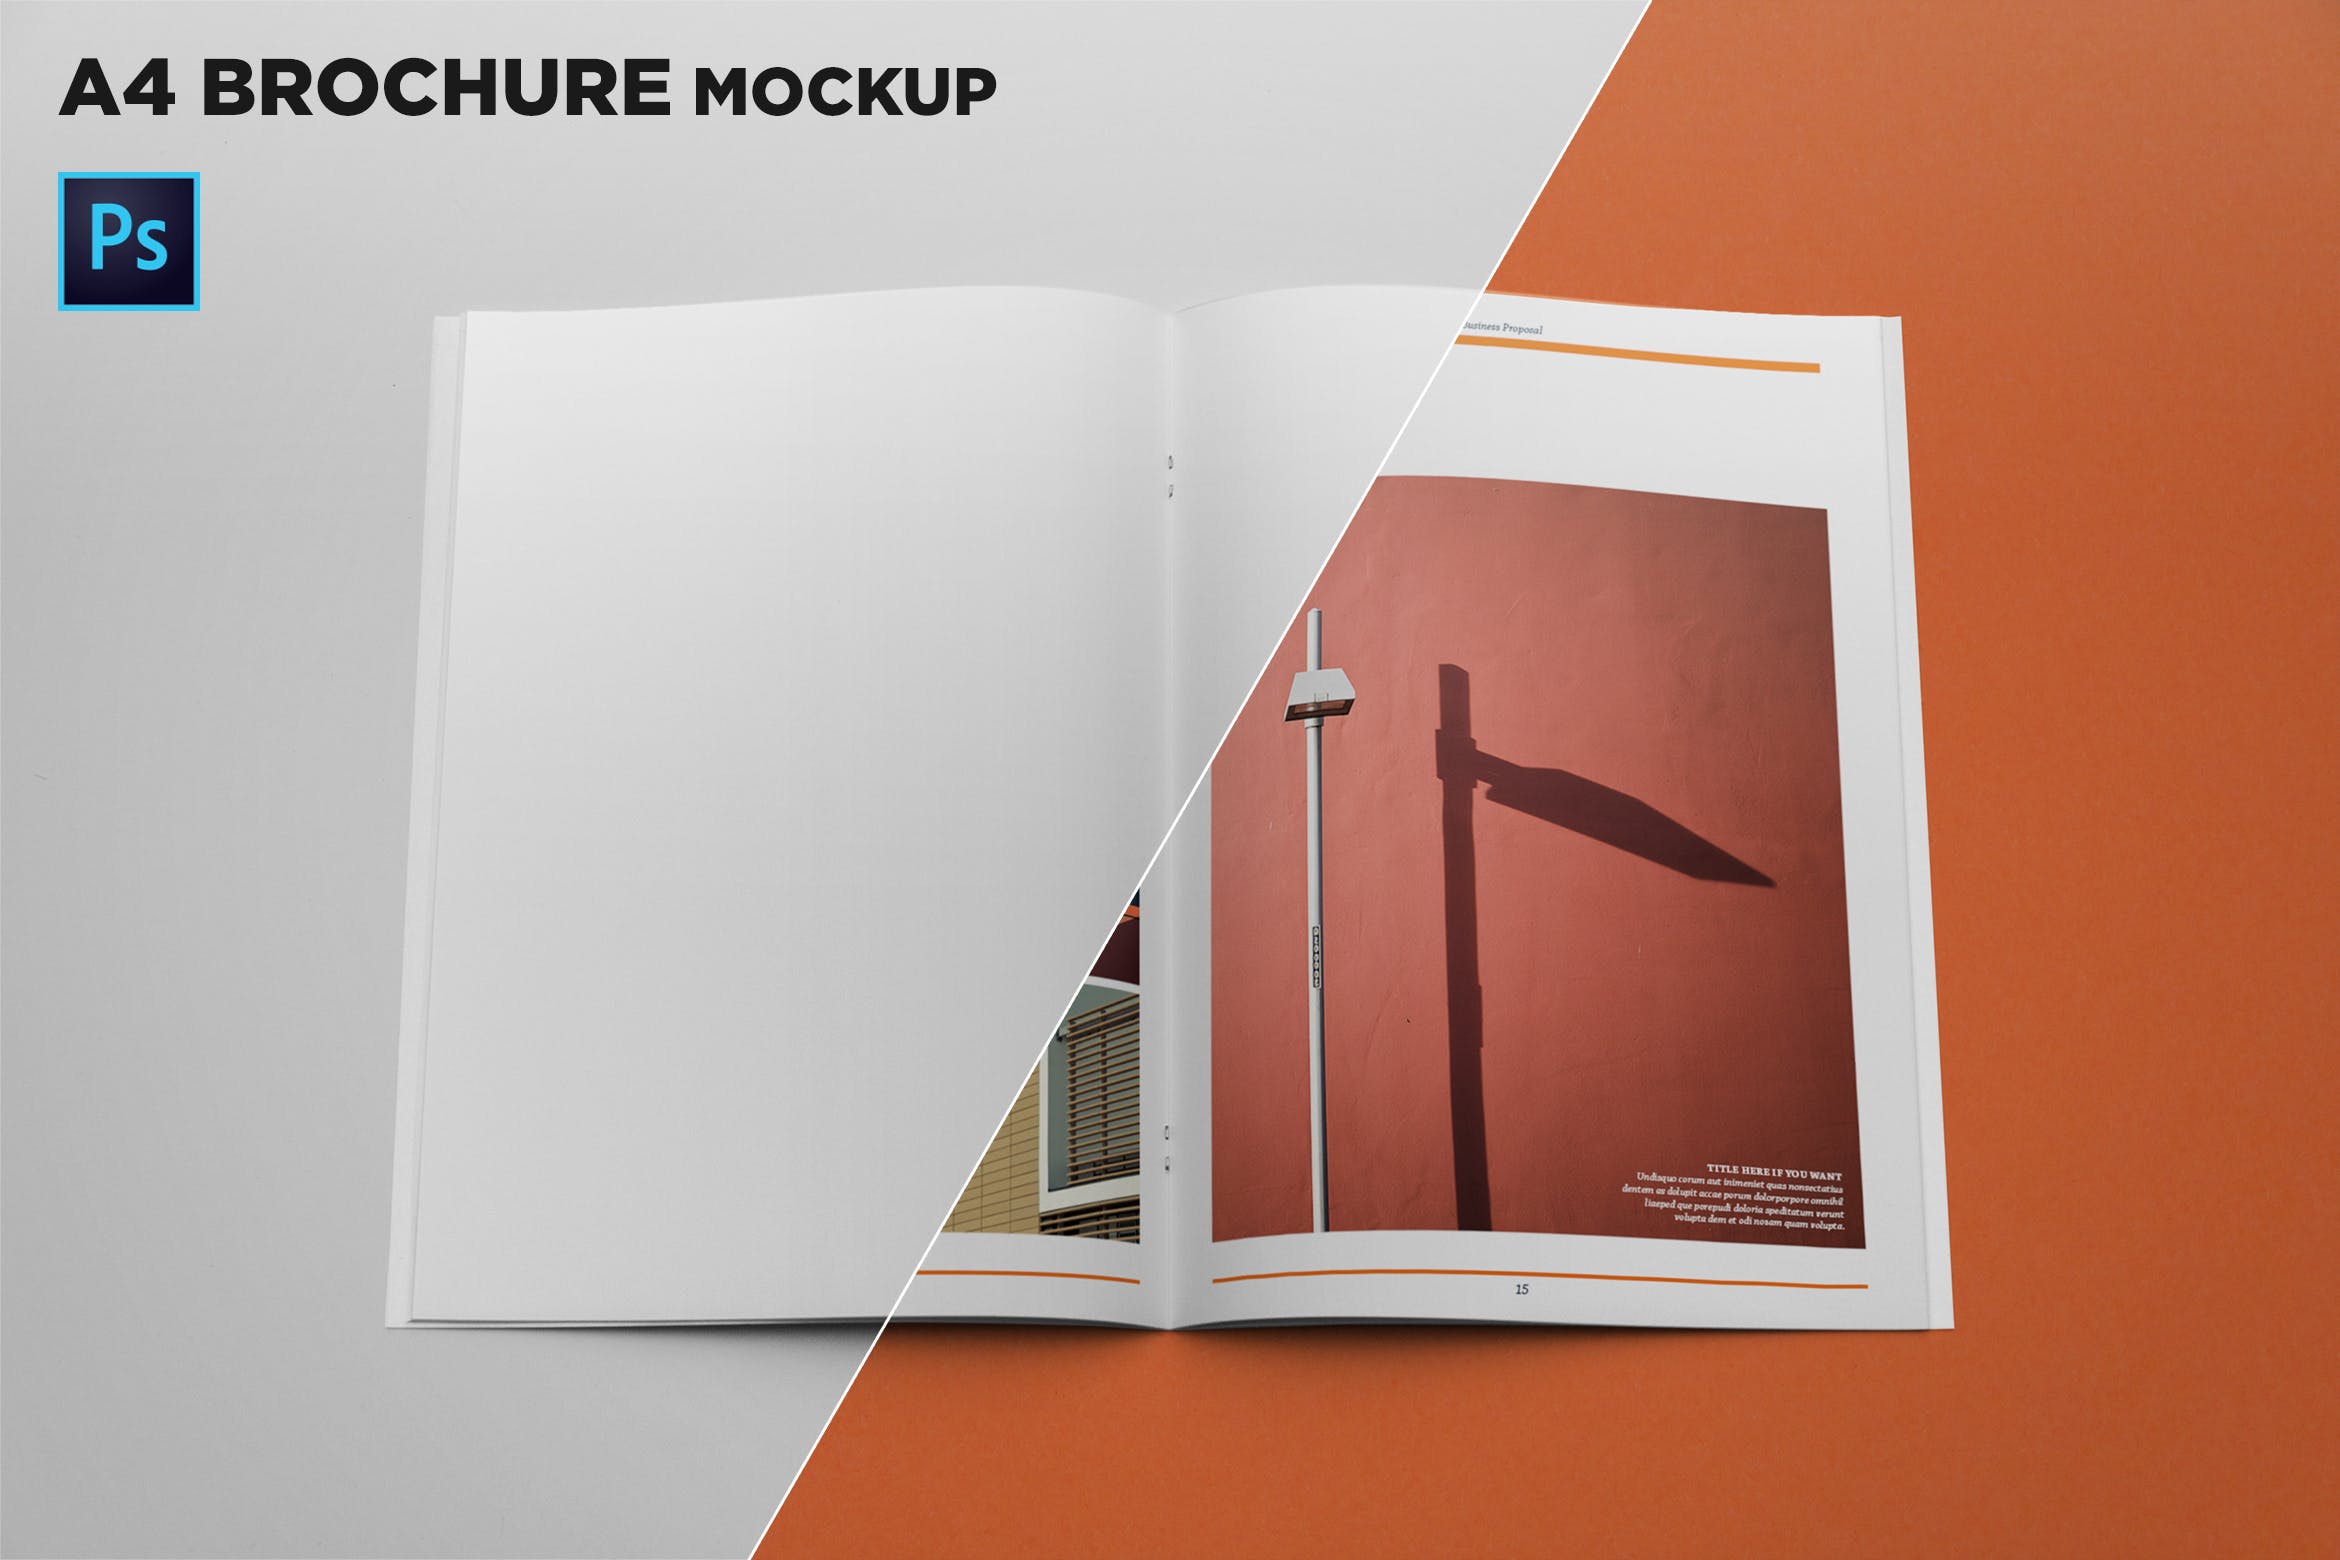 A4宣传小册子/企业画册内页设计顶视图样机素材库精选 A4 Brochure Mockup Top View插图